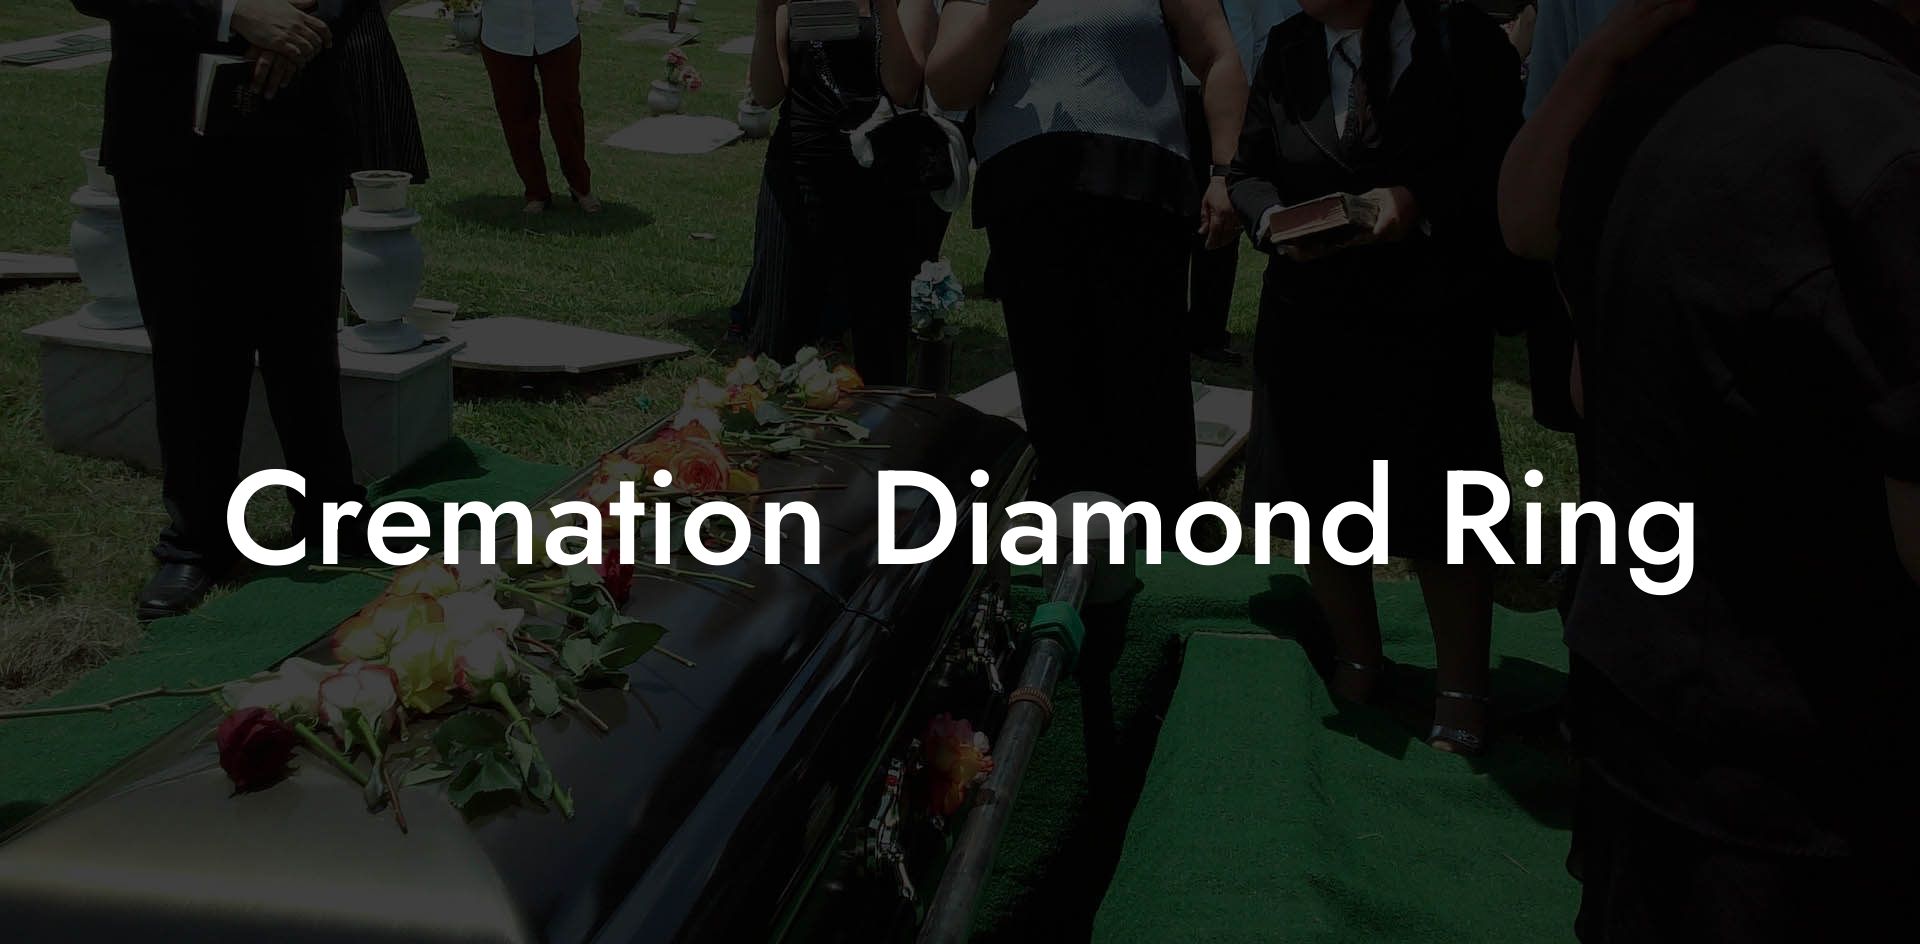 Cremation Diamond Ring